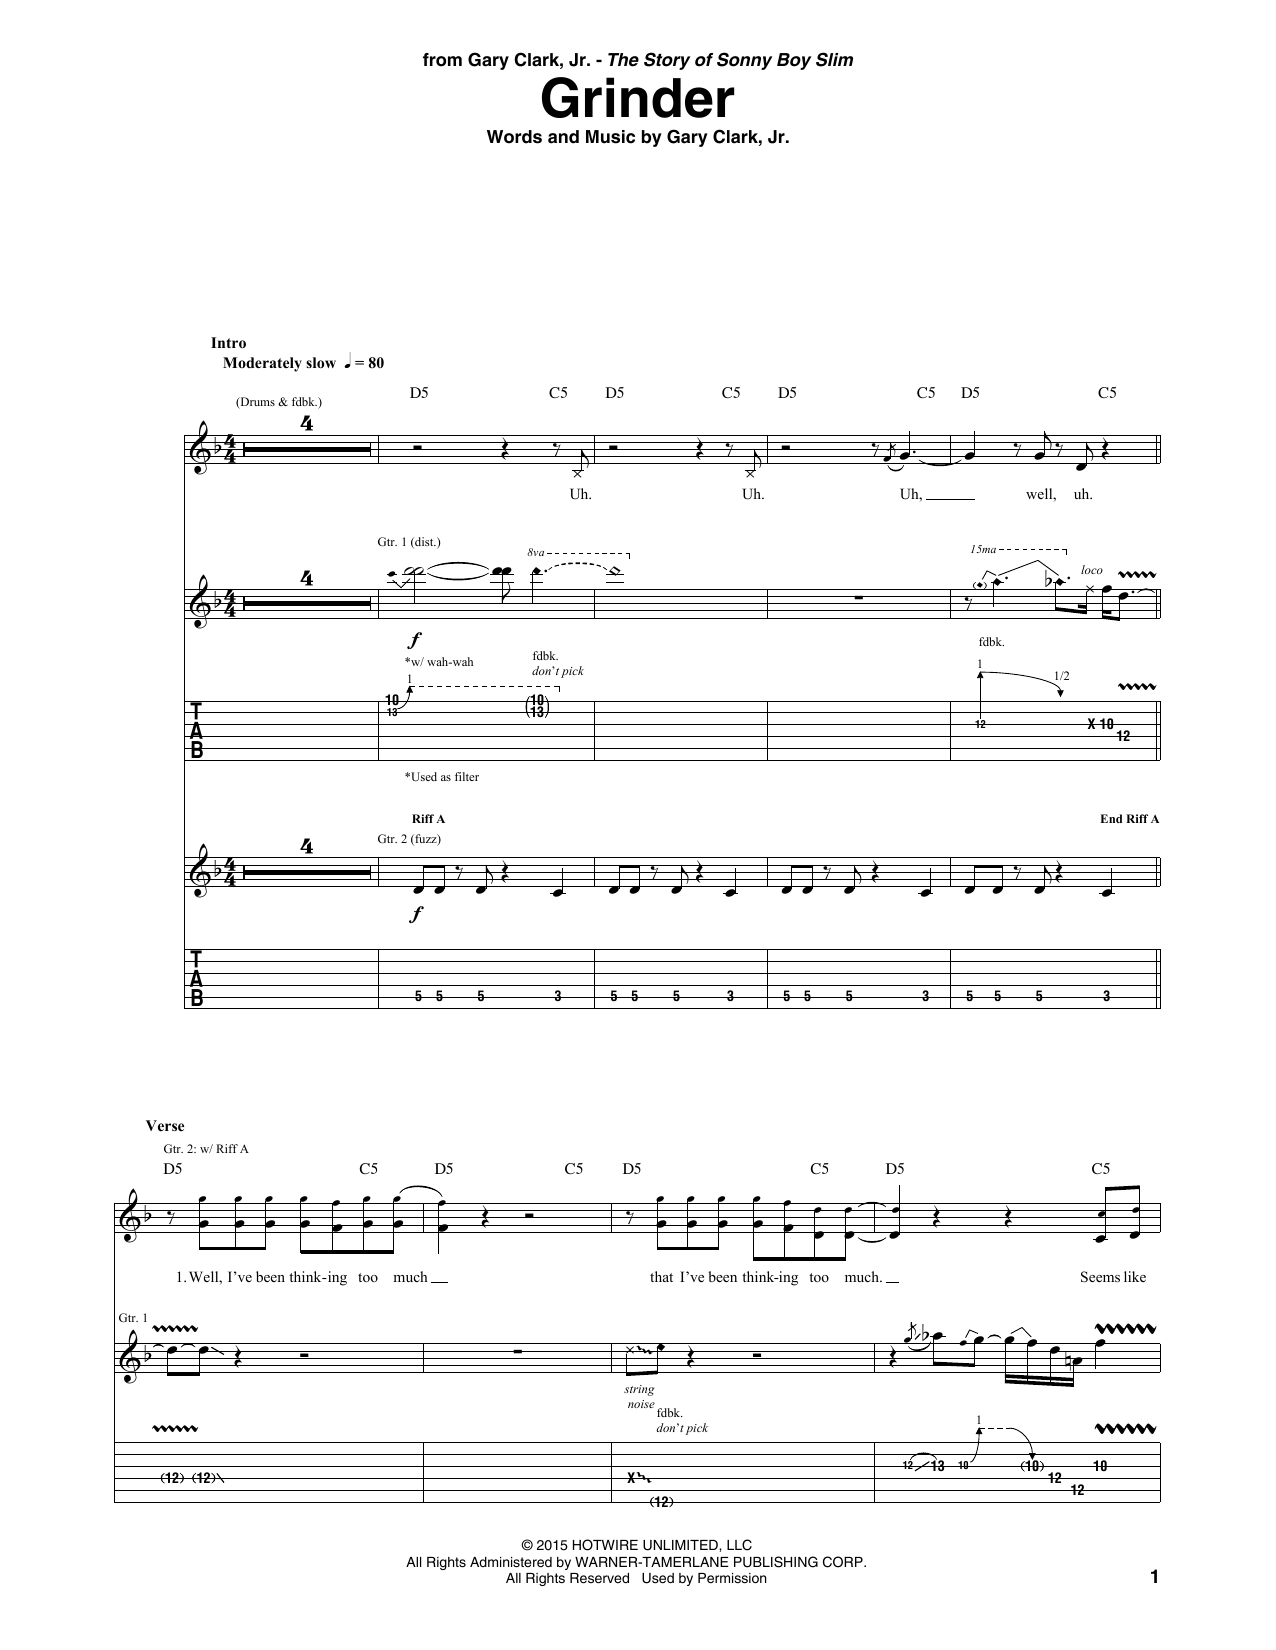 Gary Clark, Jr. Grinder Sheet Music Notes & Chords for Guitar Tab - Download or Print PDF